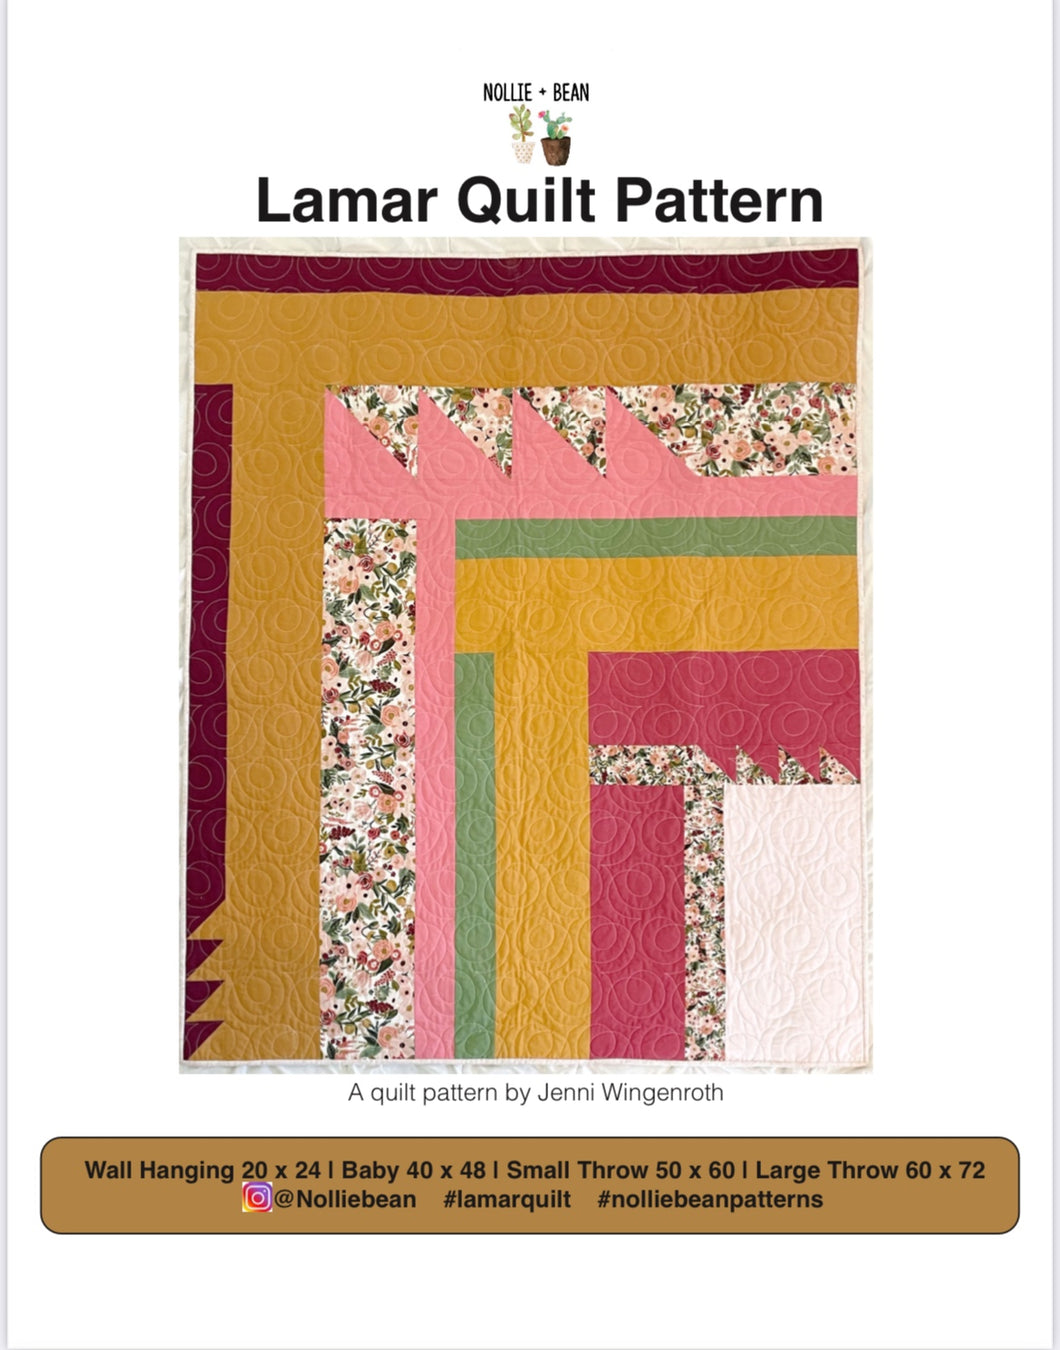 Lamar Quilt Pattern by Nollie + Bean